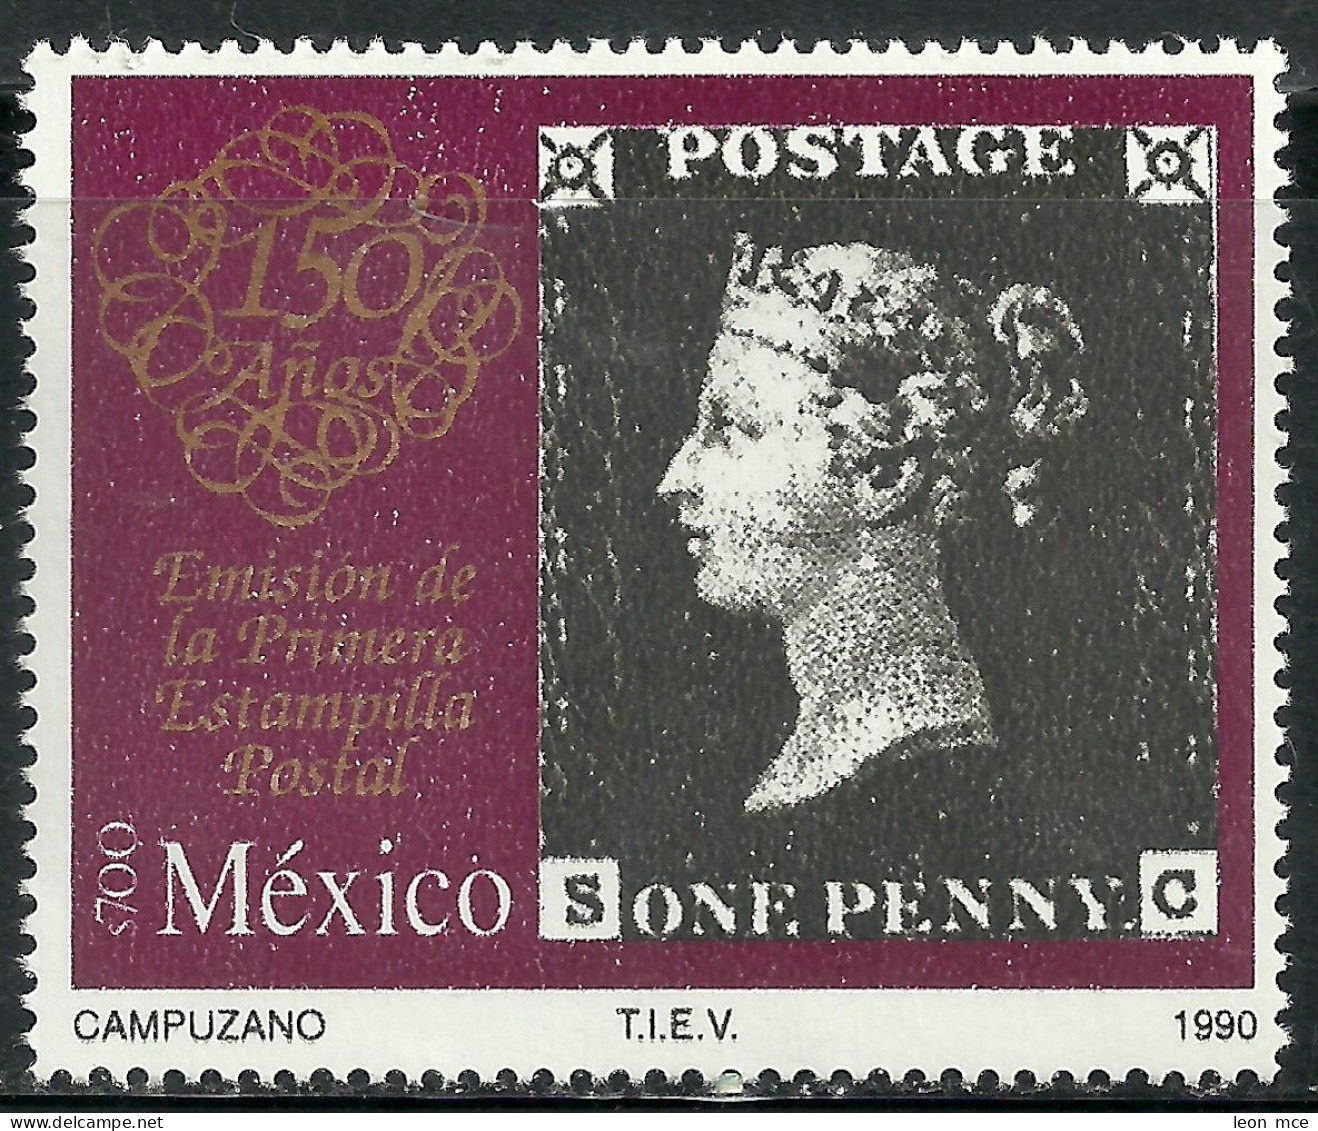 1990 MÉXICO PRIMERA ESTAMPILLA POSTAL ONE PENNY Sc. 1645 MNH FIRST POSTAGE STAMPS 150th. ANNIV. - México